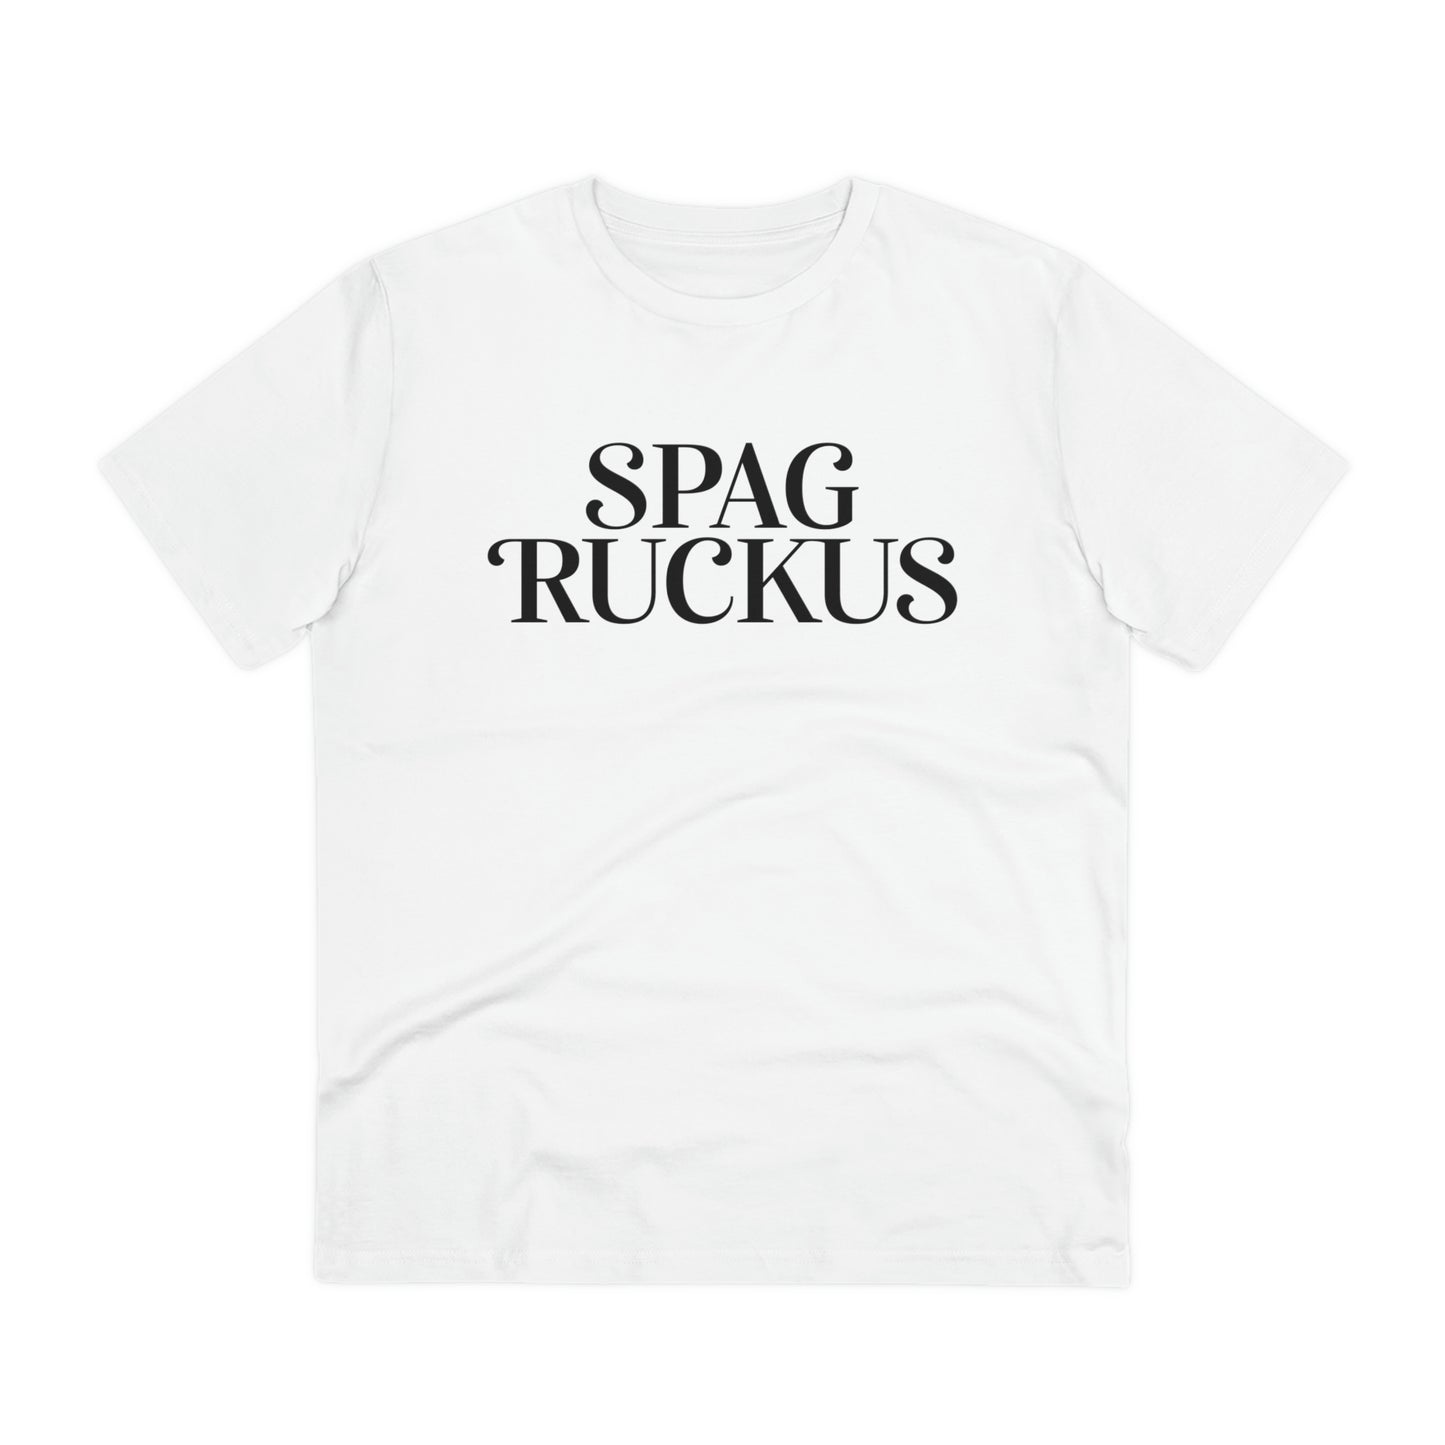 EUROPE - Spag Ruckus classic - Organic T-shirt - Unisex